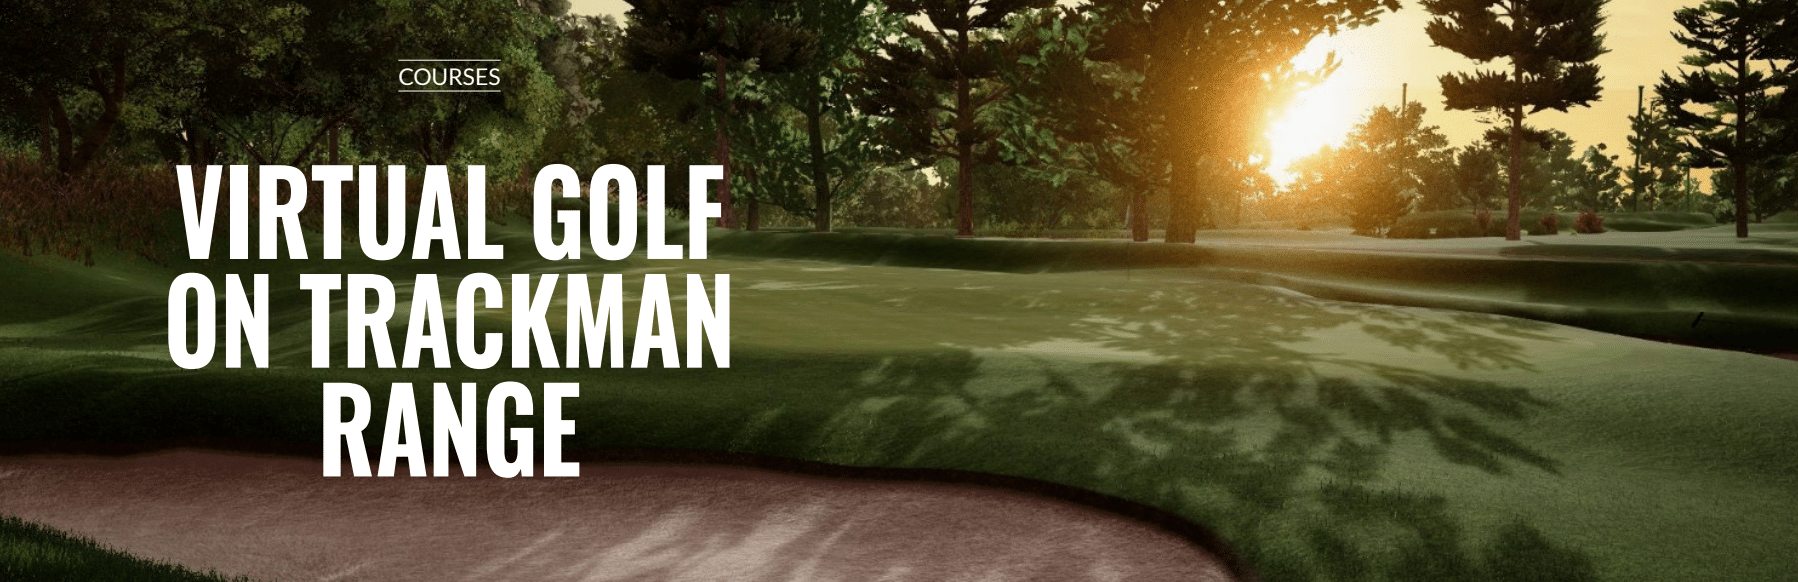 Virtual Golf Banner Cropped